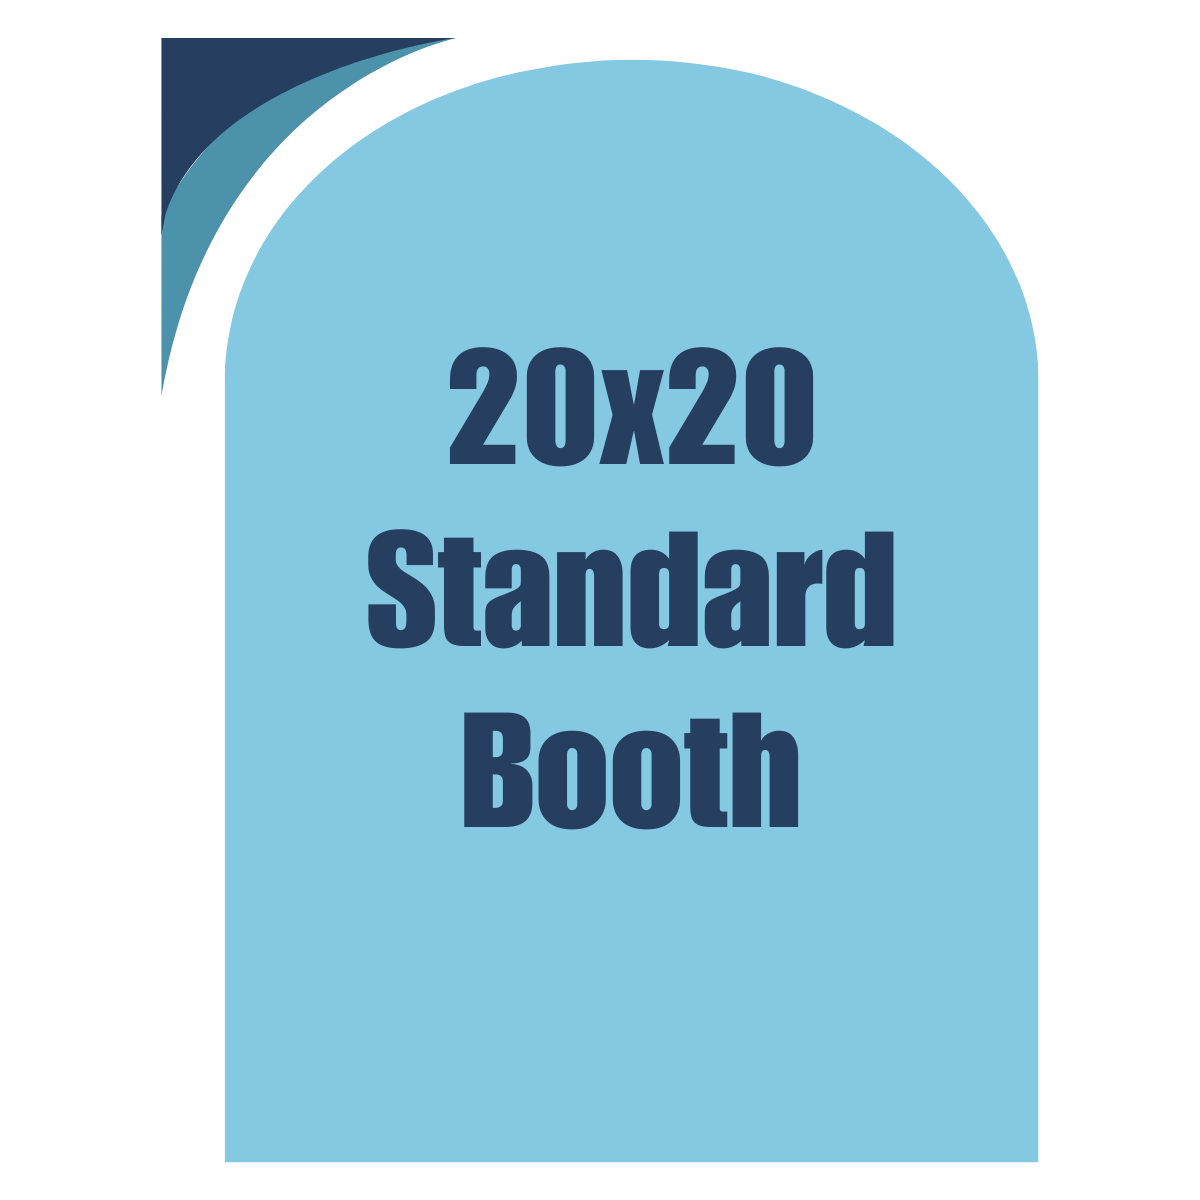 20x20 Standard Booth